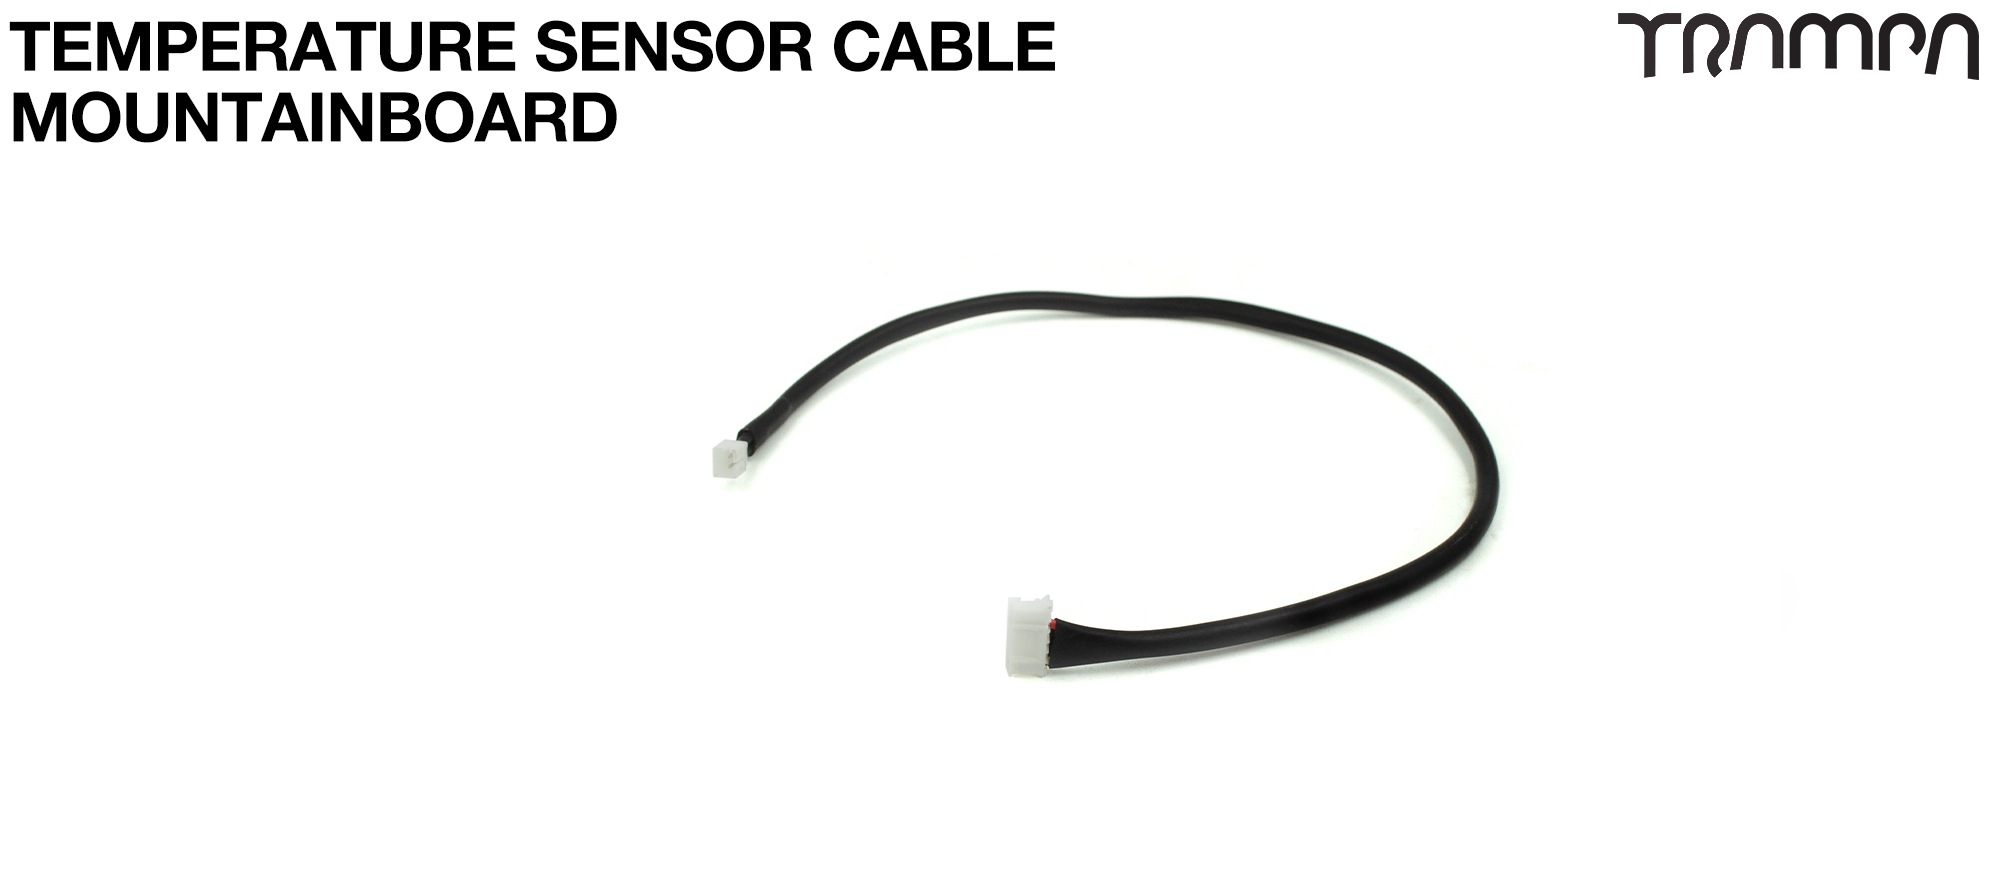 TEMP Sensor Cable - MOUNTAINBOARD